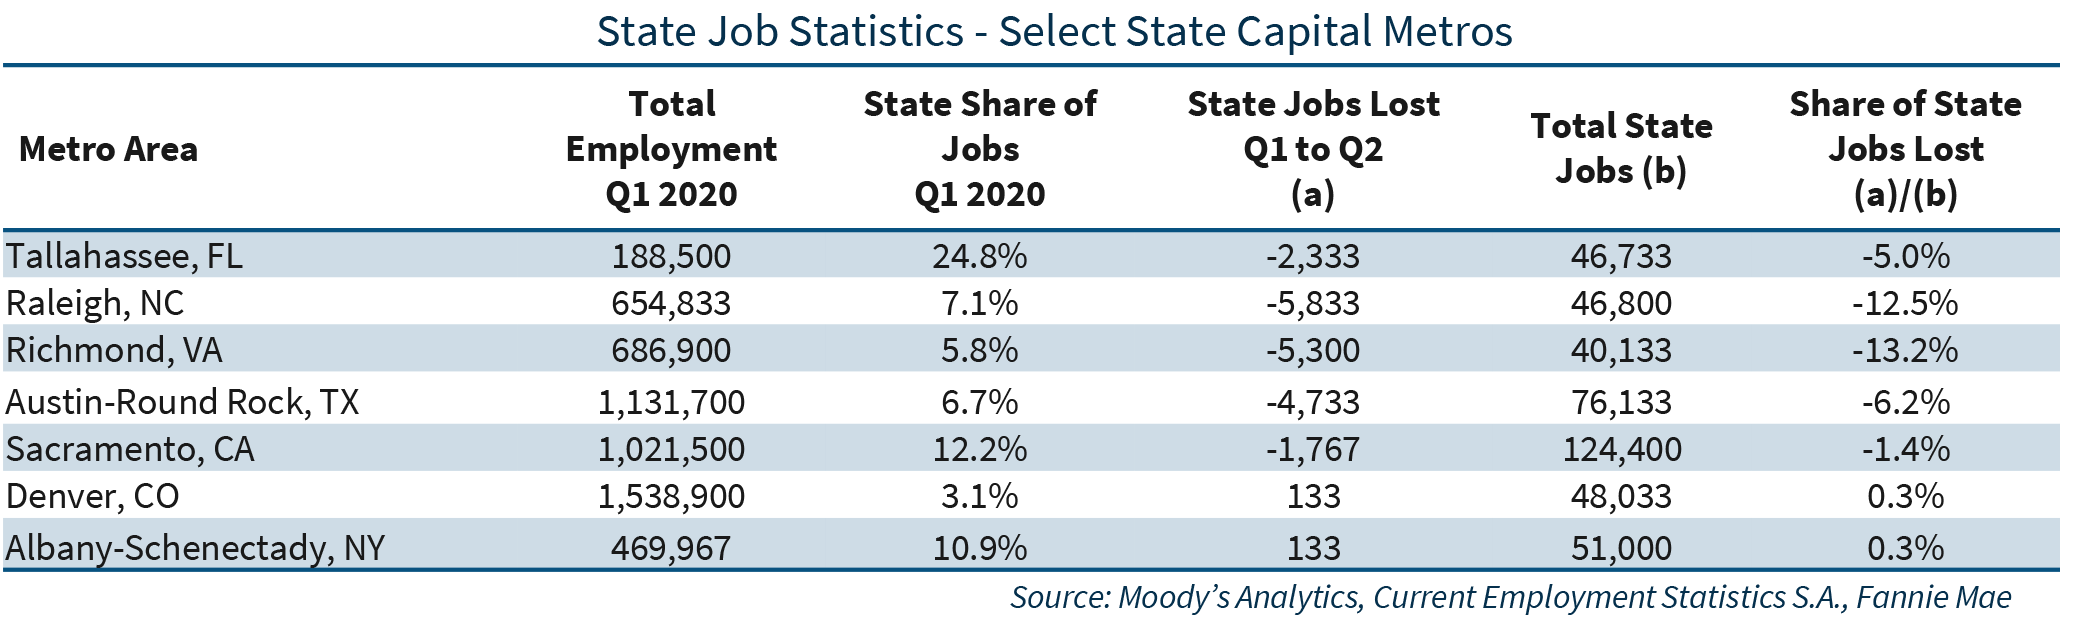 State Job Statistics - Select State Capital Metros